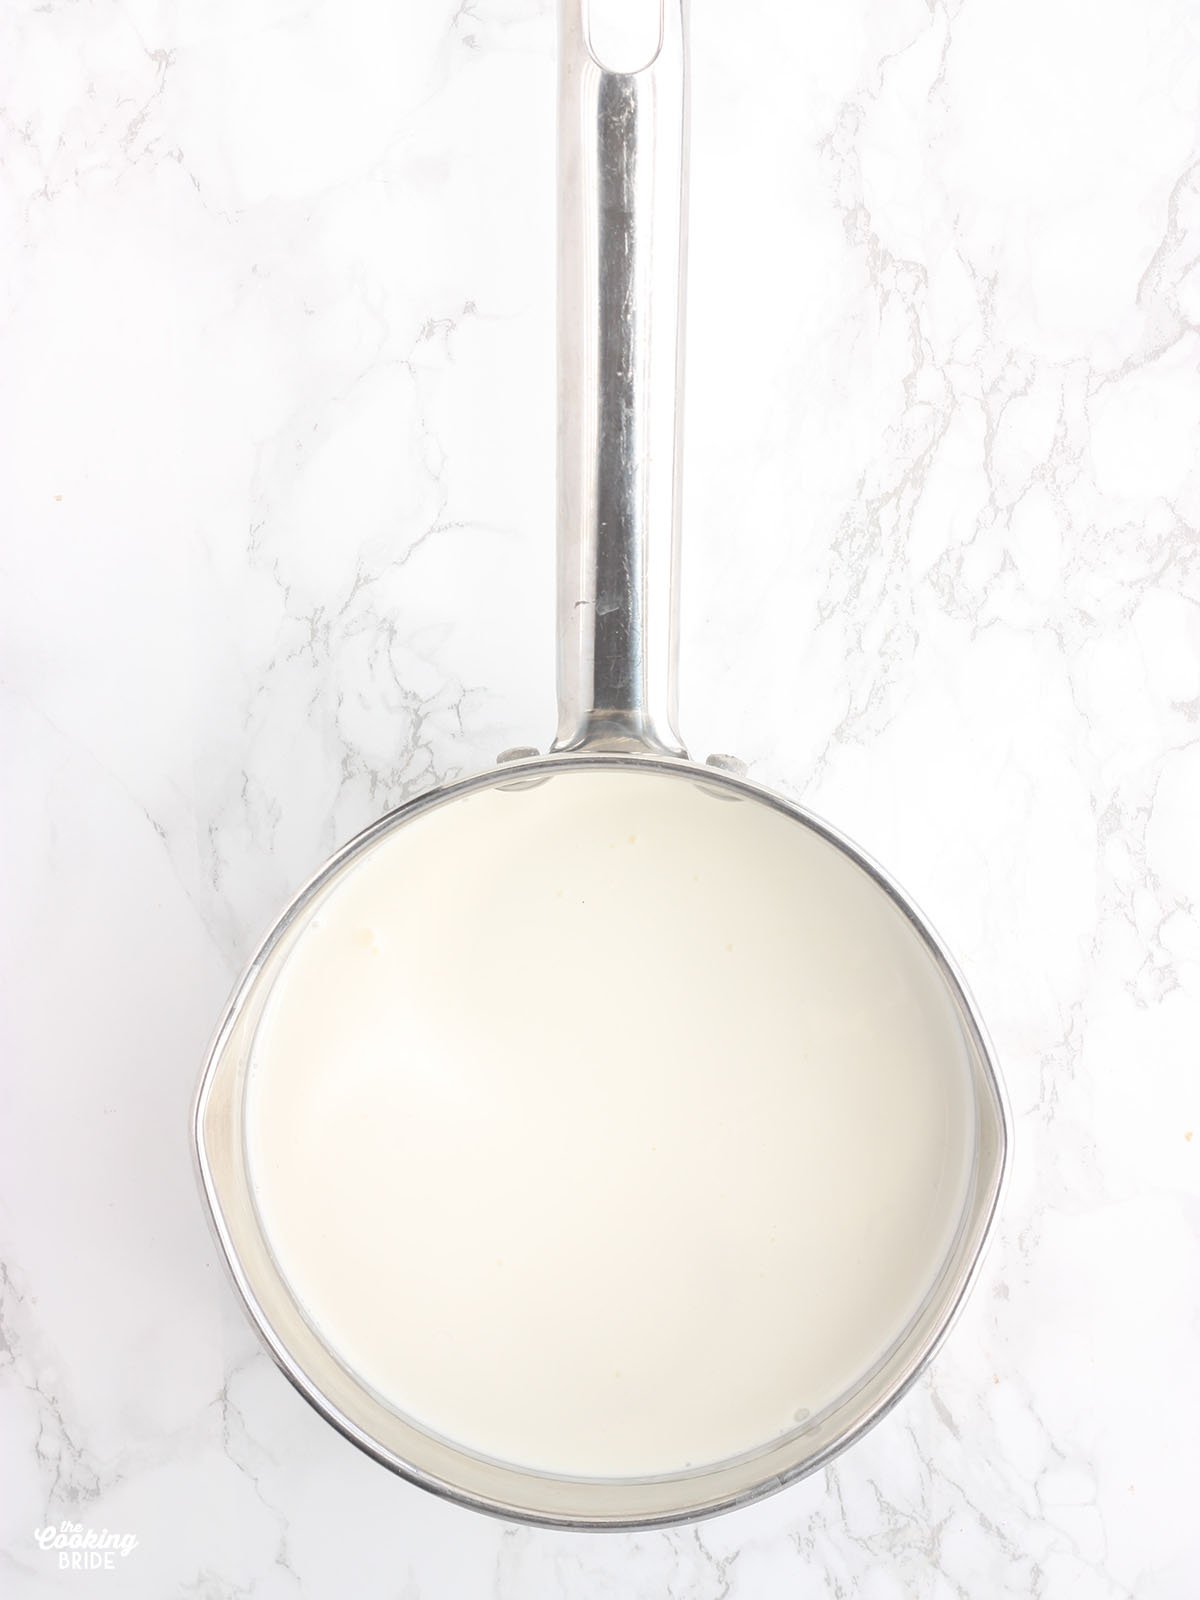 milk and heavy cream warming in a steel saucepan